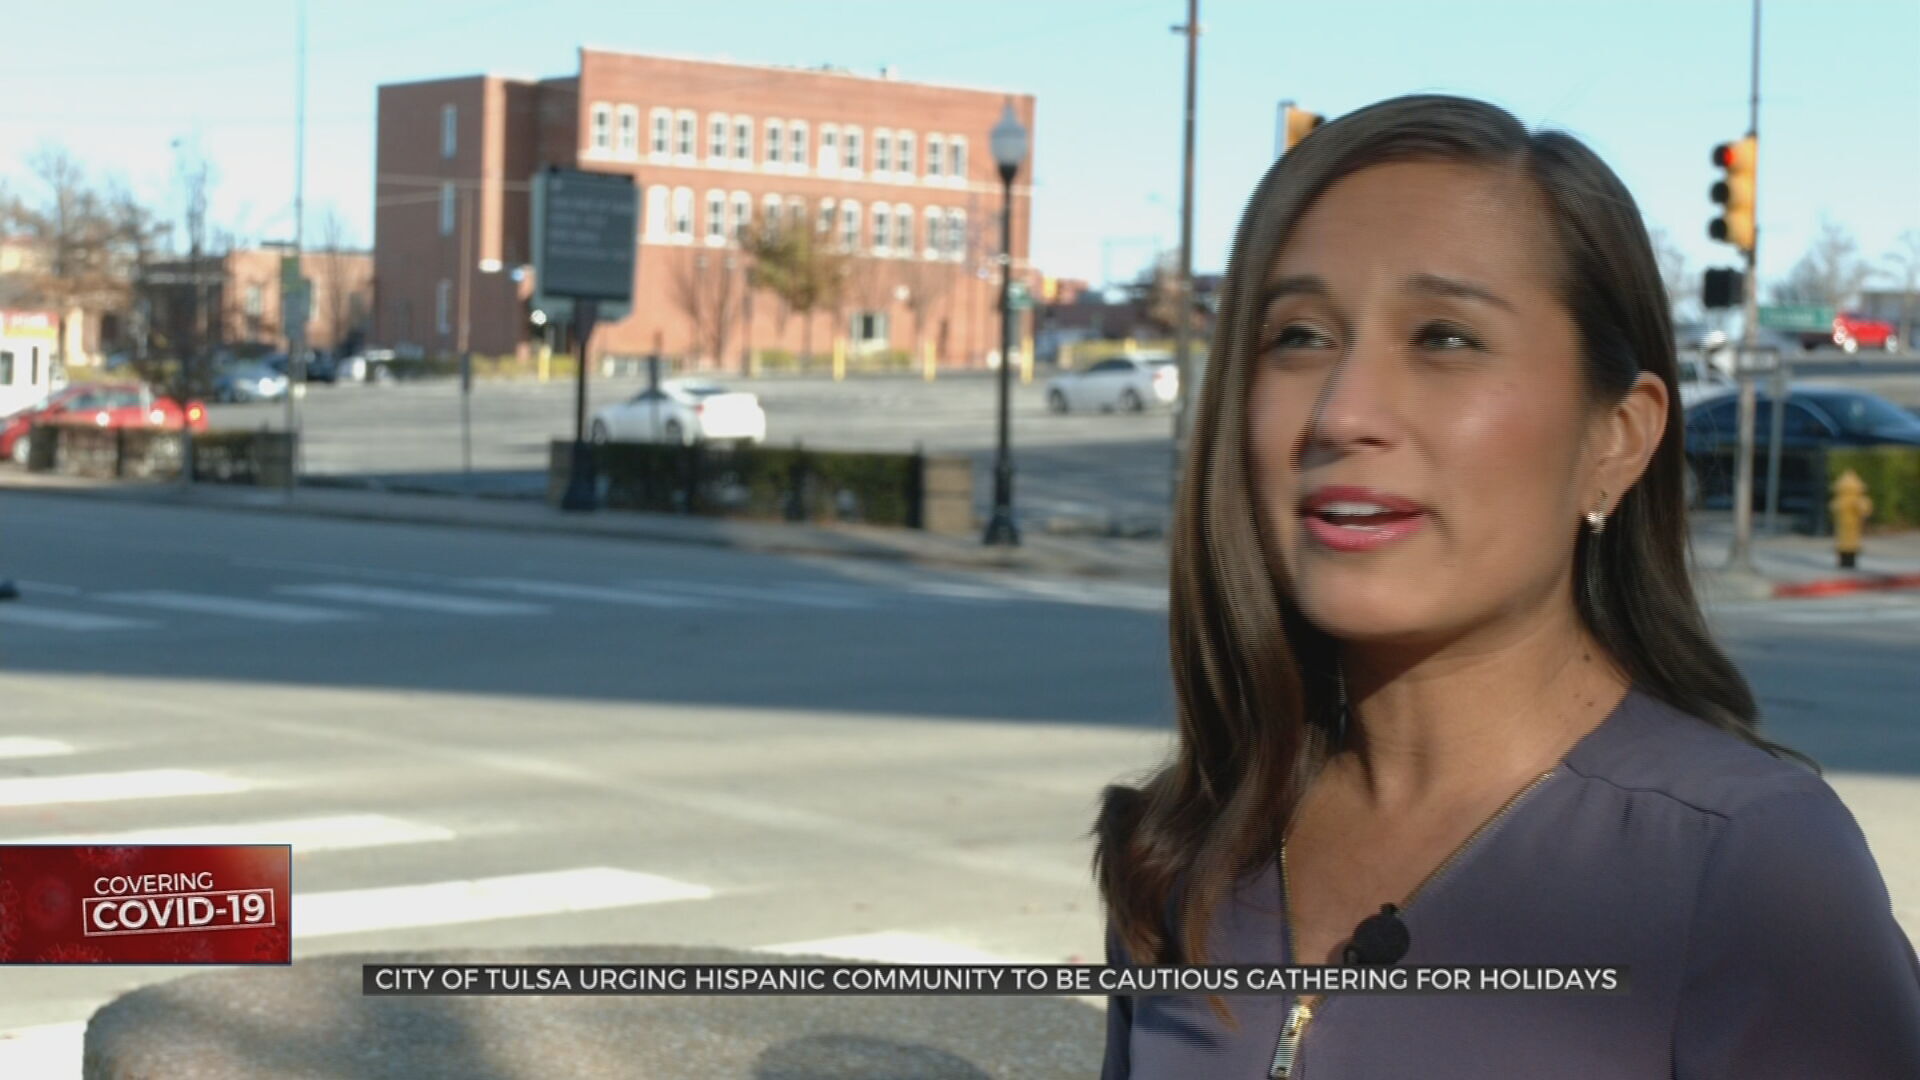 City Of Tulsa Urges Hispanic Community To Be Cautious Gathering For Holidays 